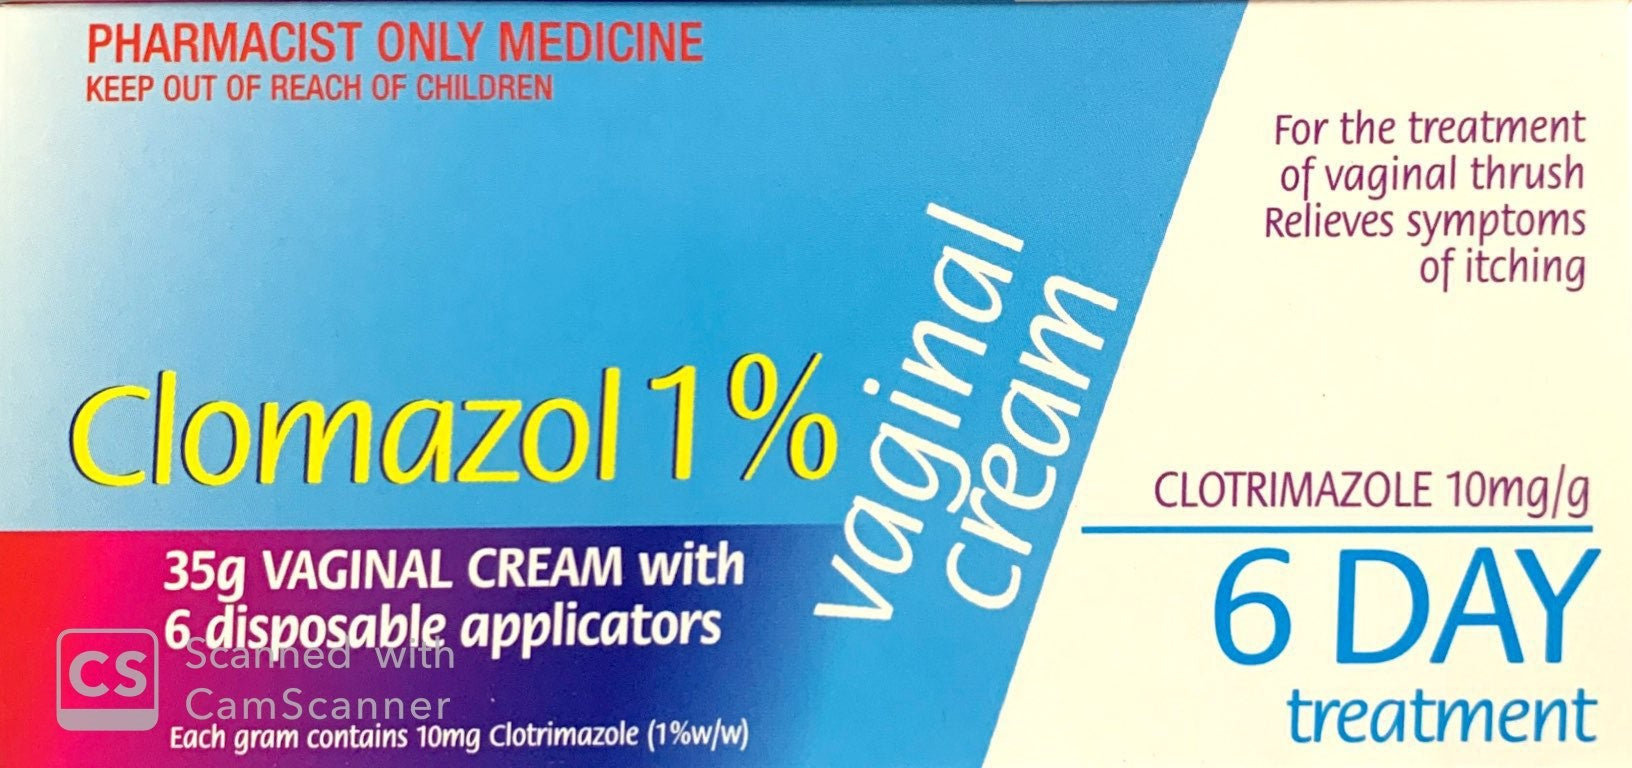 Clomazol 1% Vaginal Cream For Treatment Of Vaginal Thrush 35g - Pharmacist Only Medicine - Pakuranga Pharmacy